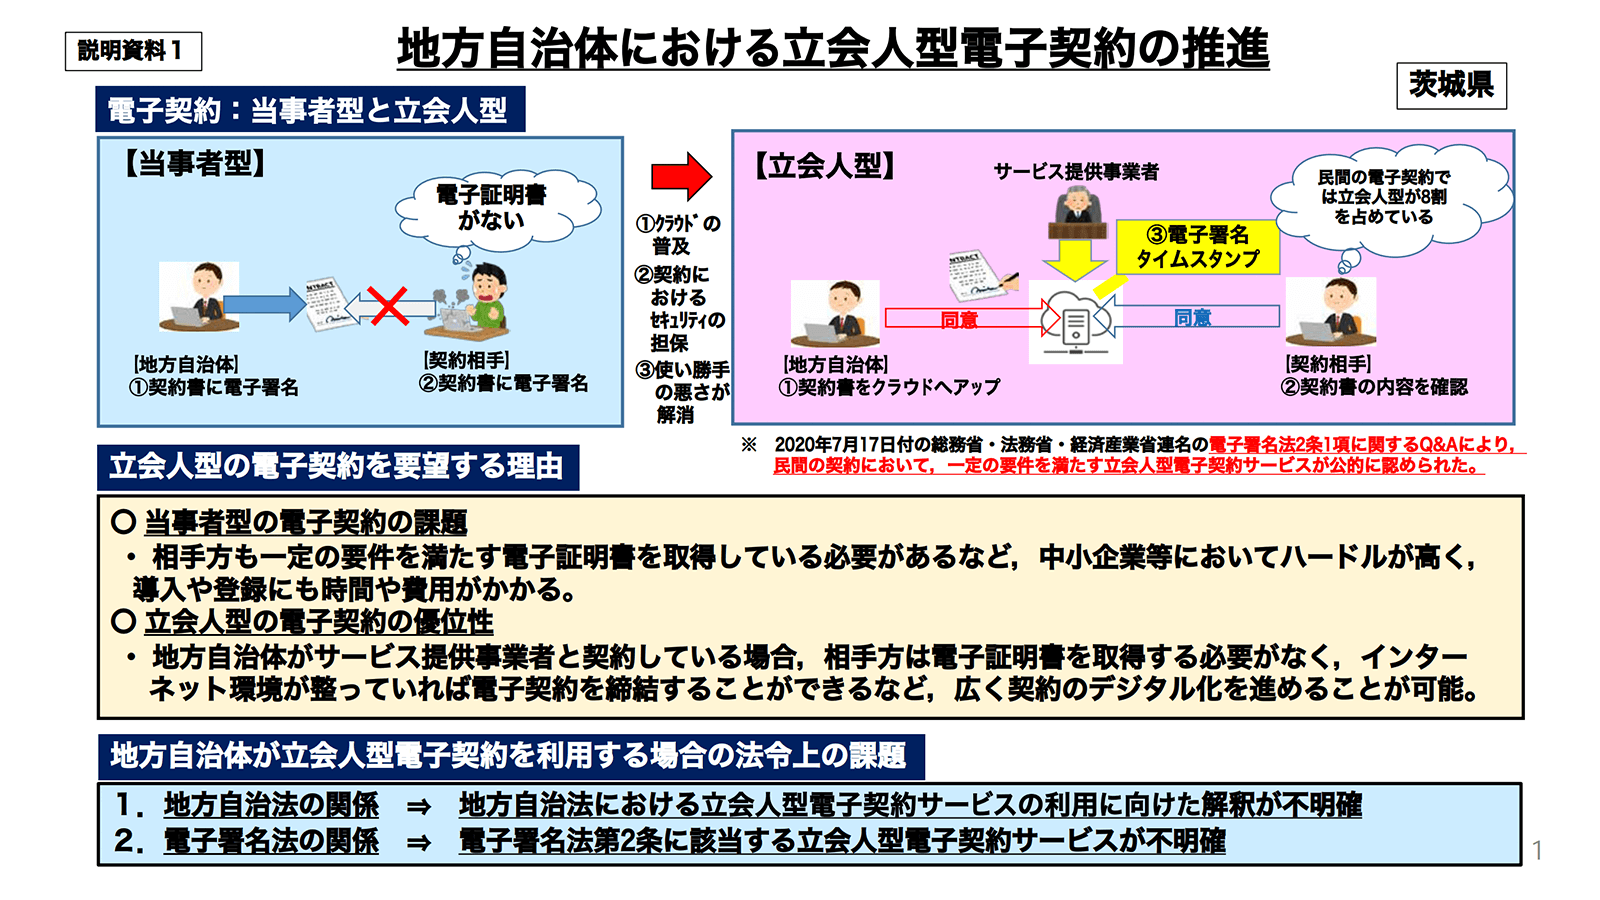 https://www8.cao.go.jp/kisei-kaikaku/kisei/meeting/wg/digital/20201117/201117digital03.pdf 2020年11月24日最終アクセス